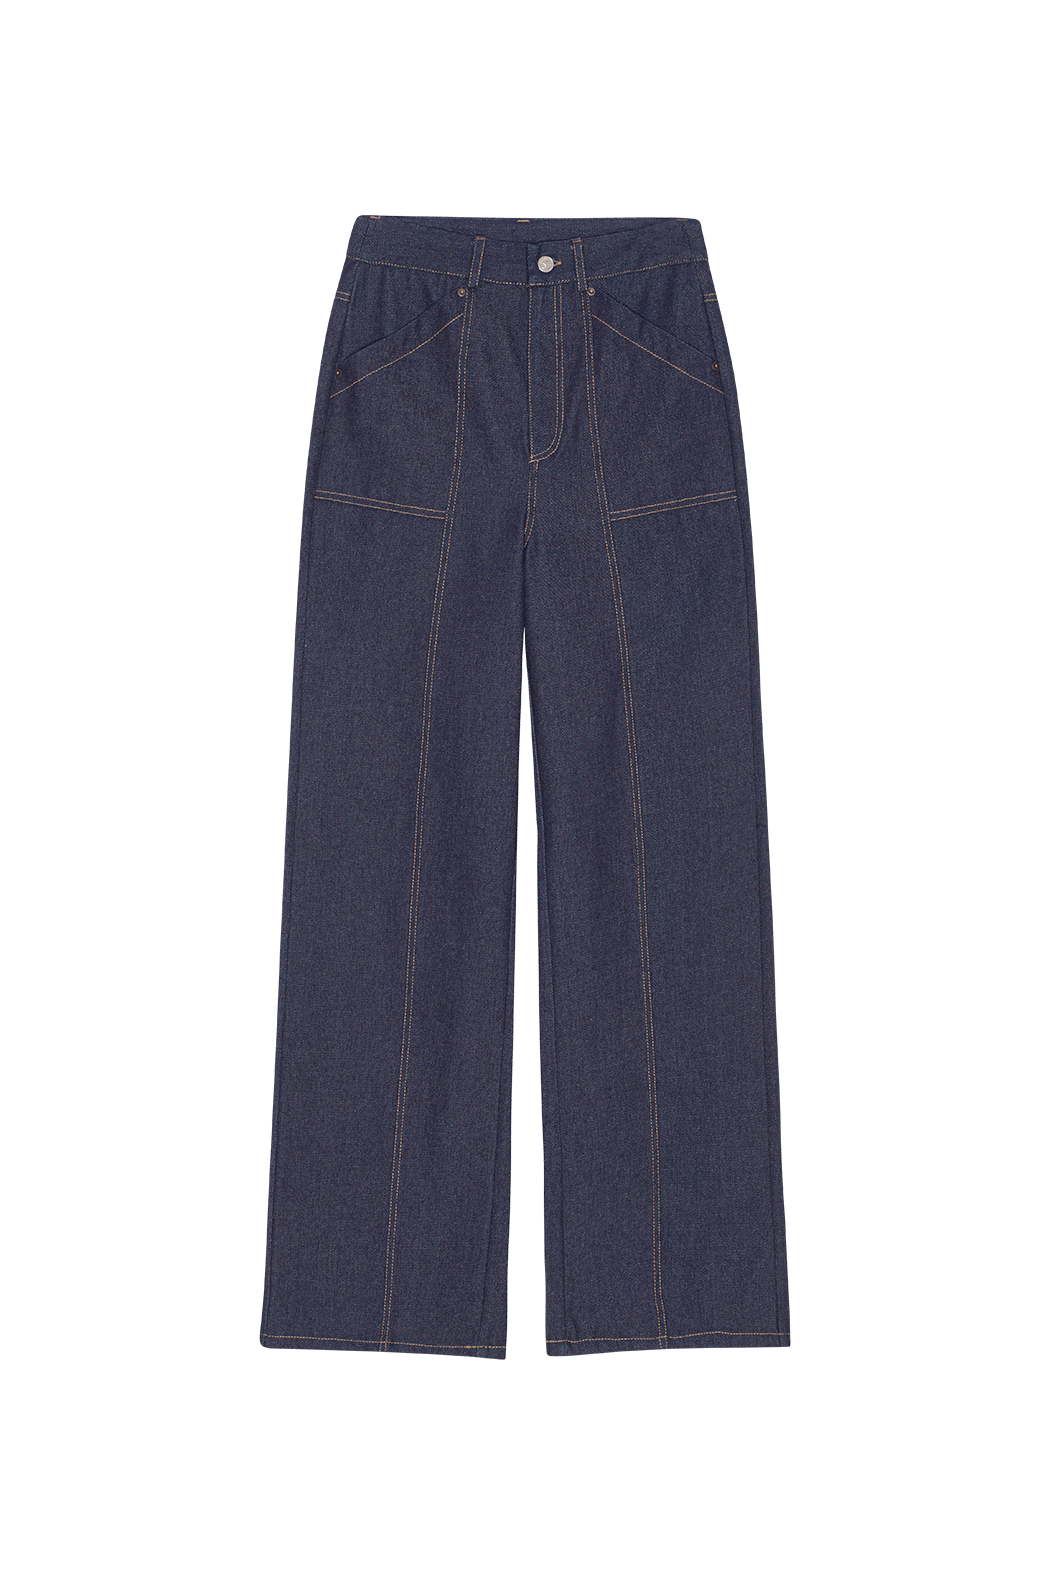 New Favorite Jeans - Dallas Wardrobe // Fashion & Lifestyle Blog // Dallas